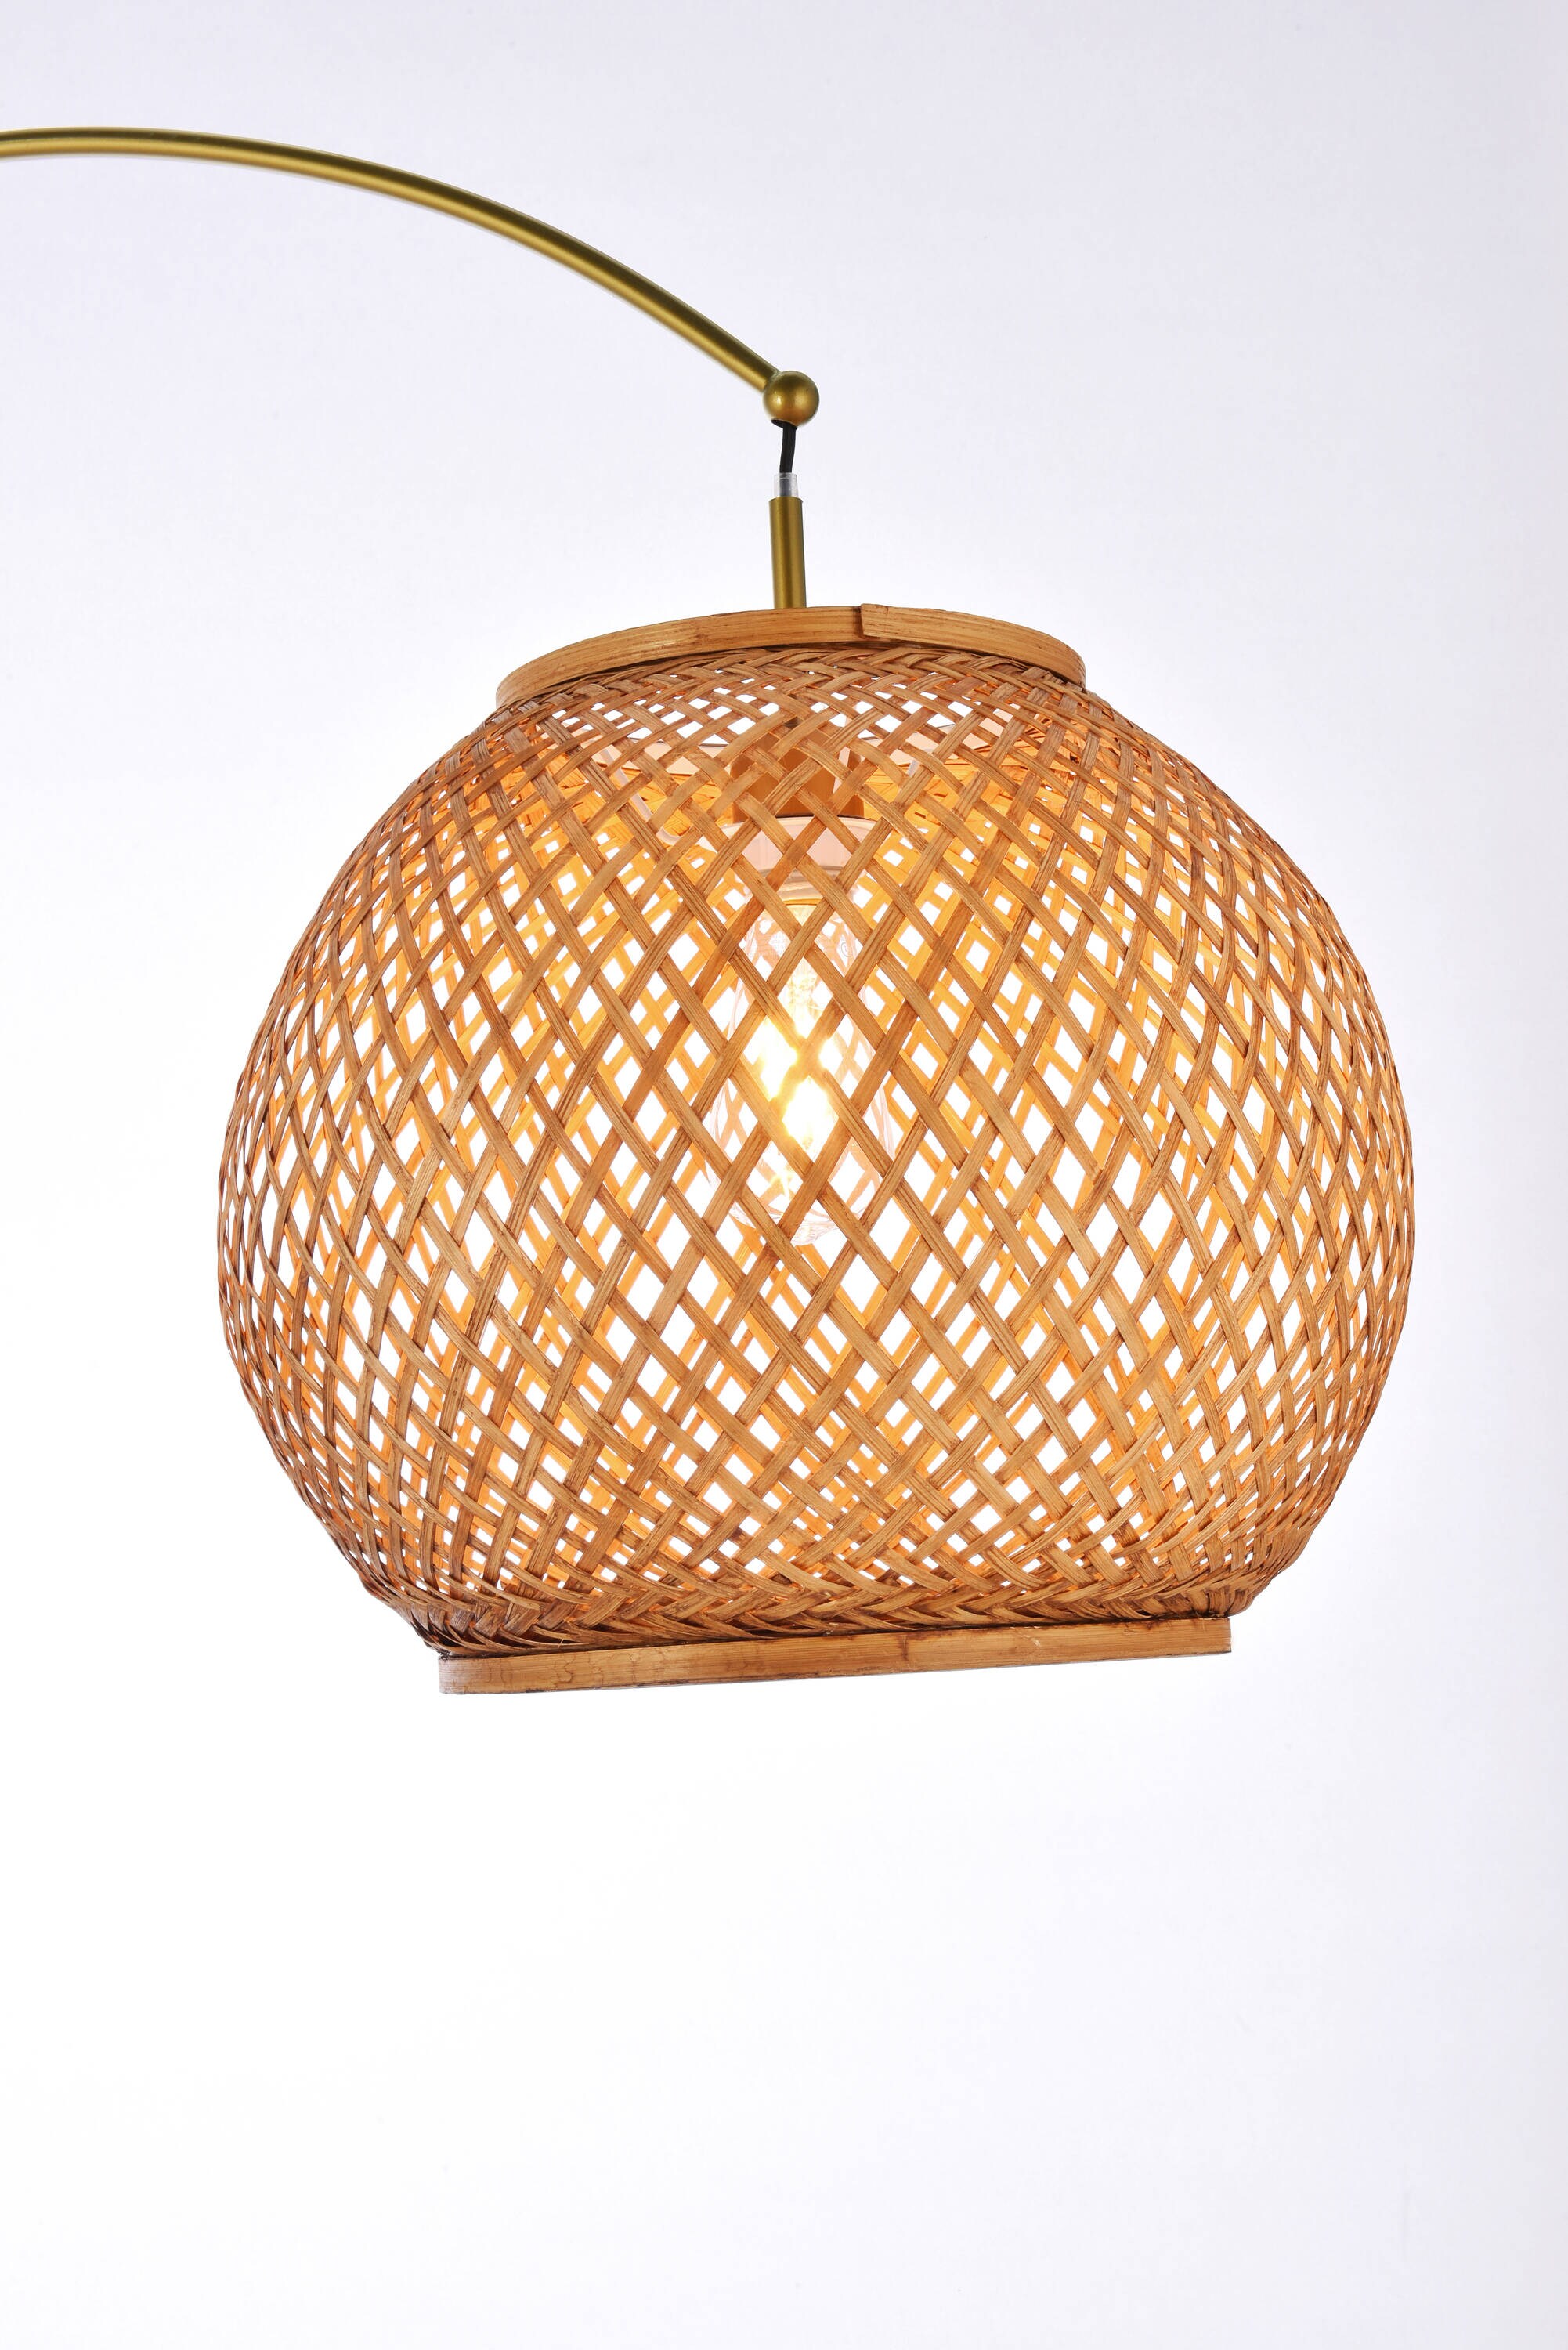 AloaDecor Lighting 1-Light Antique Brass Gold Arc Floor Lamp with